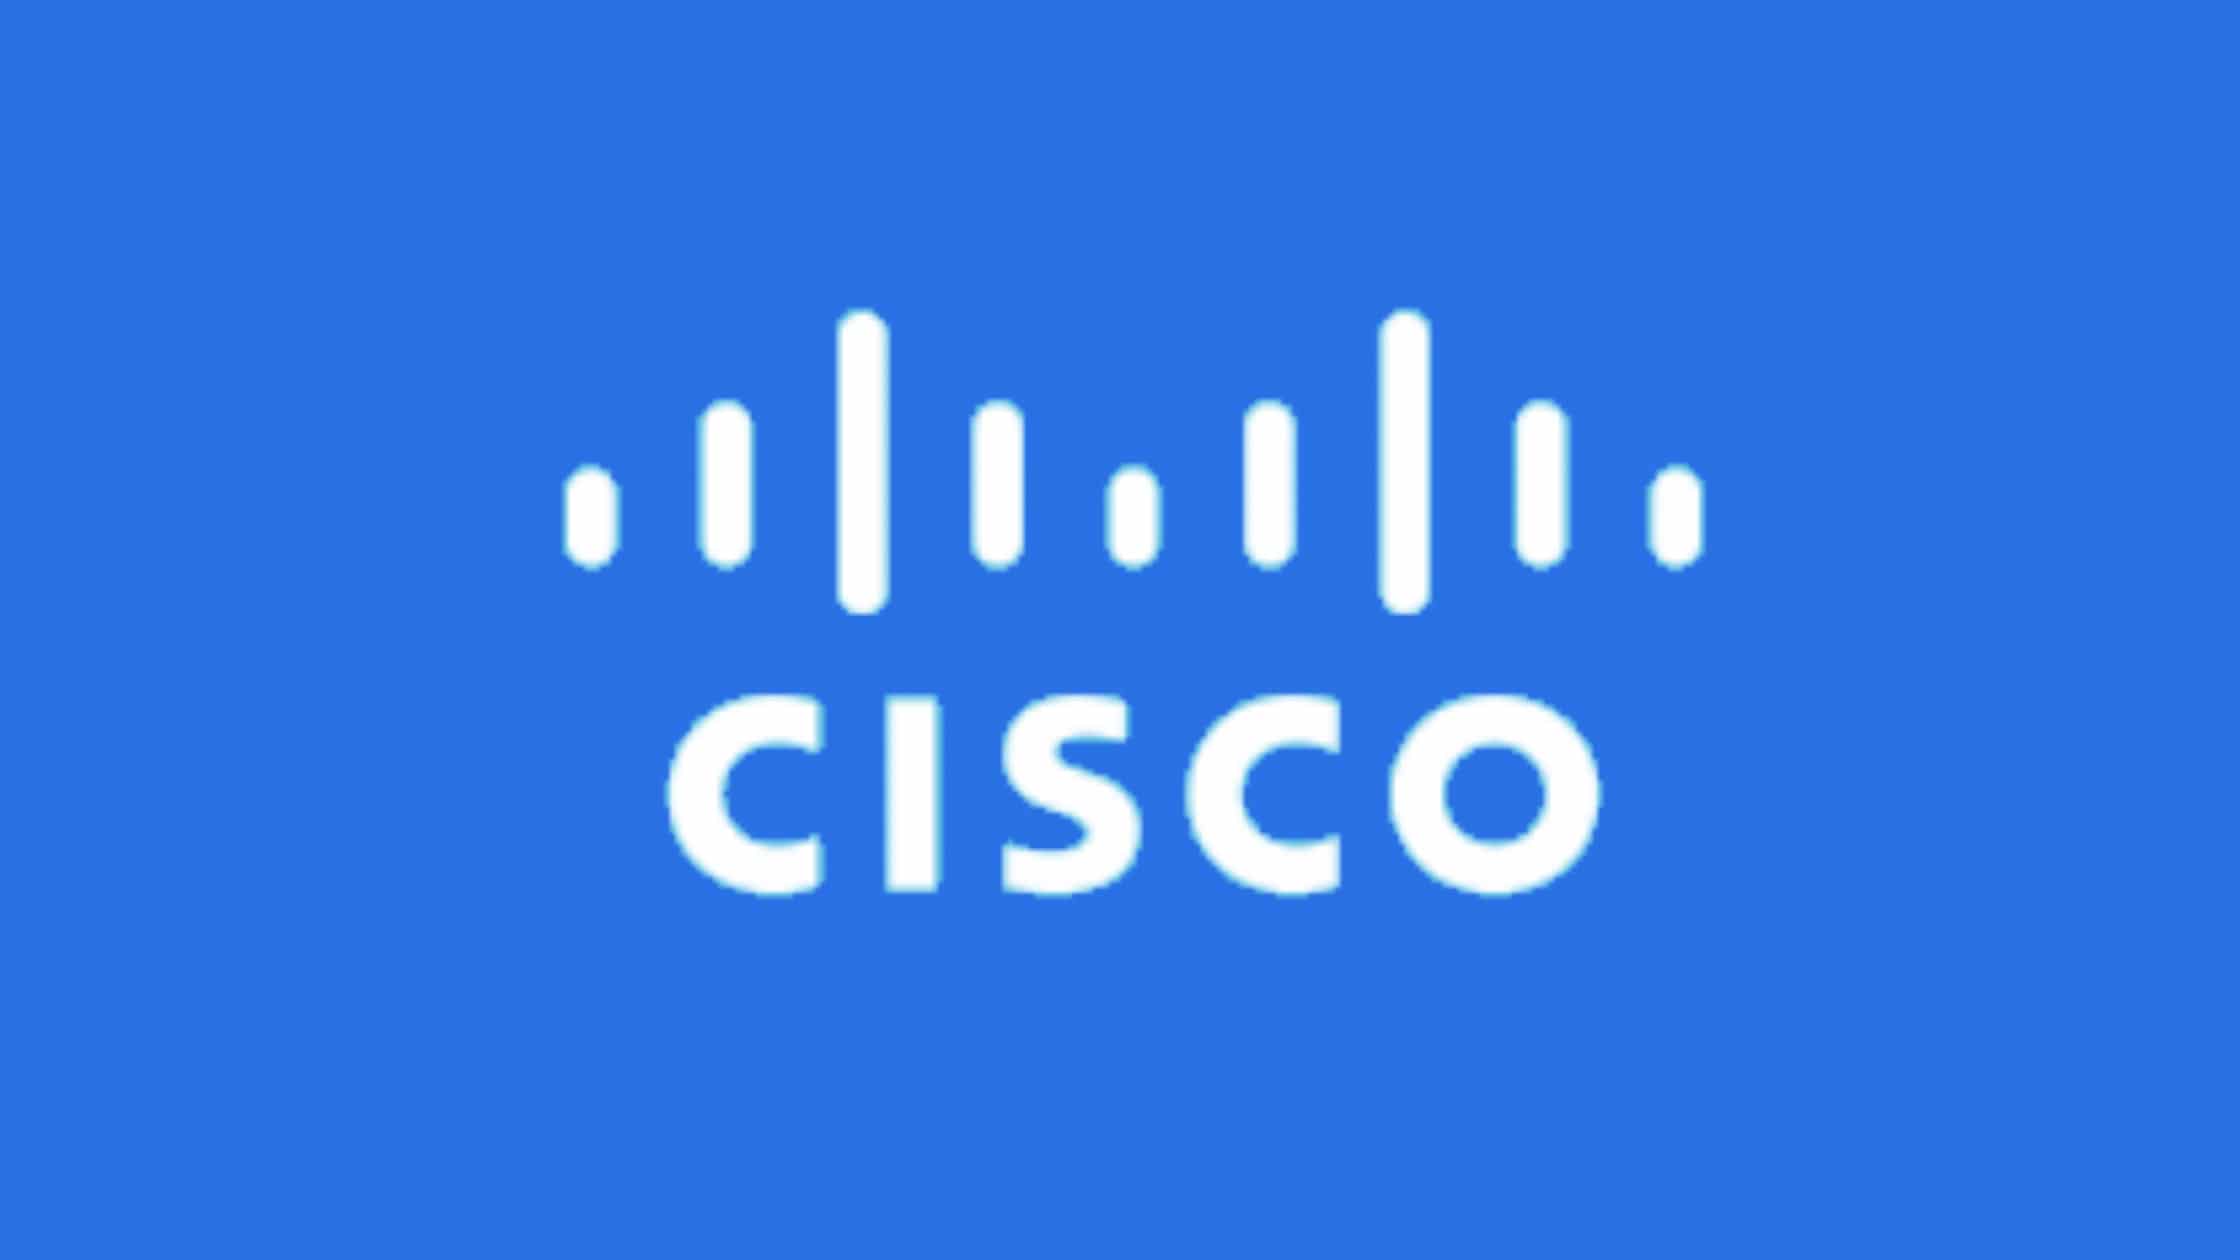 How To Fix Cve 2022 20775 And Cve 2022 20818 Two Privilege Escalation Vulnerabilities In Cisco Sd Wan Software